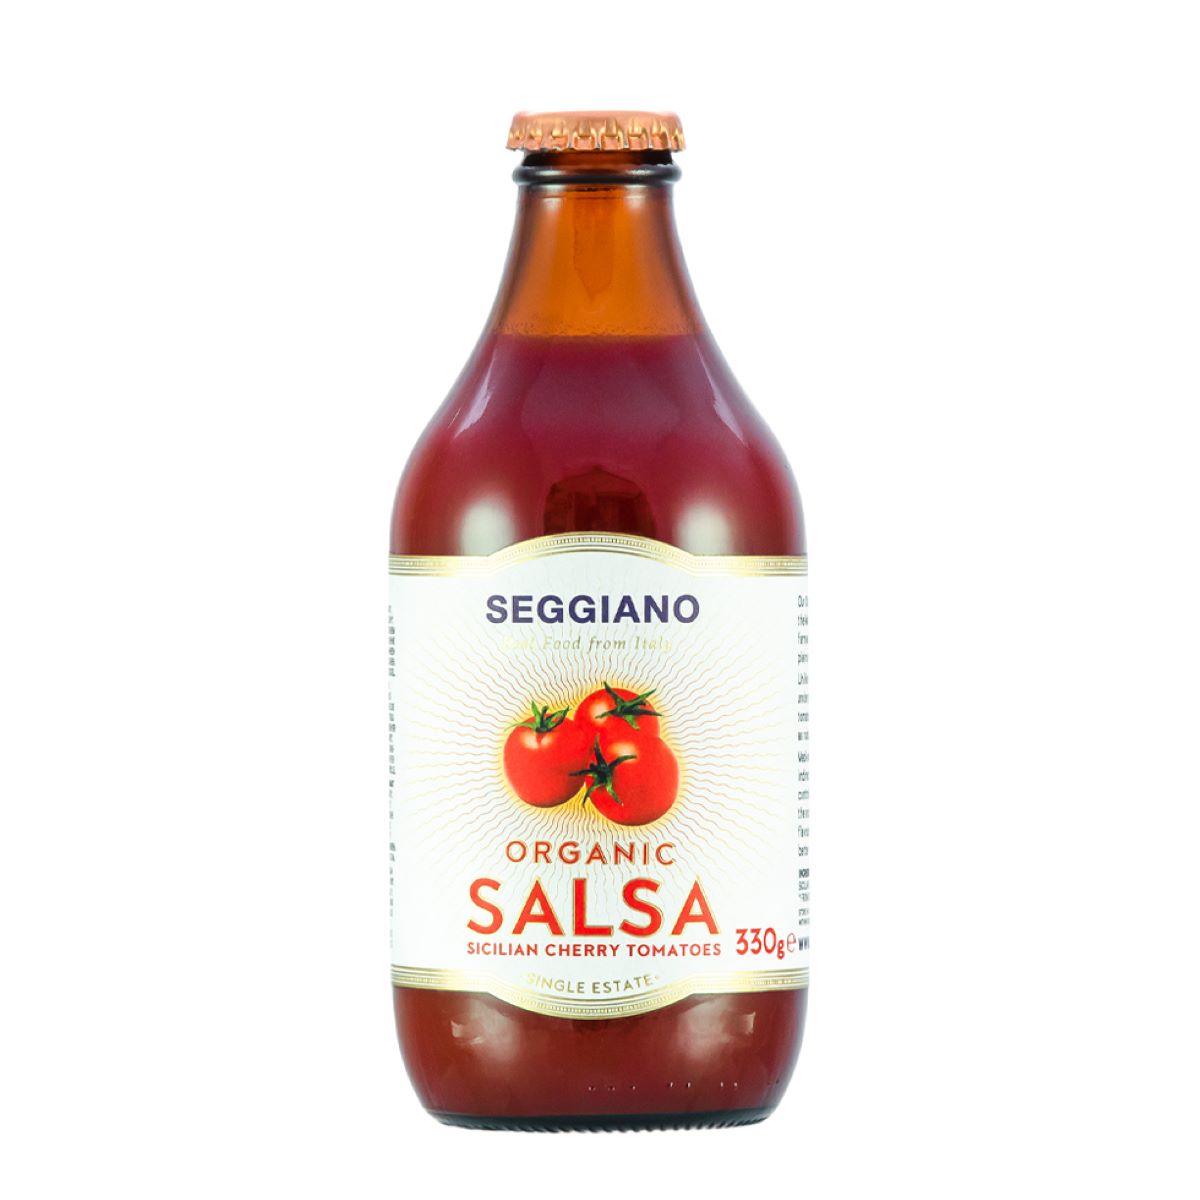 Organic Sicilian Cherry Tomato Salsa 330g